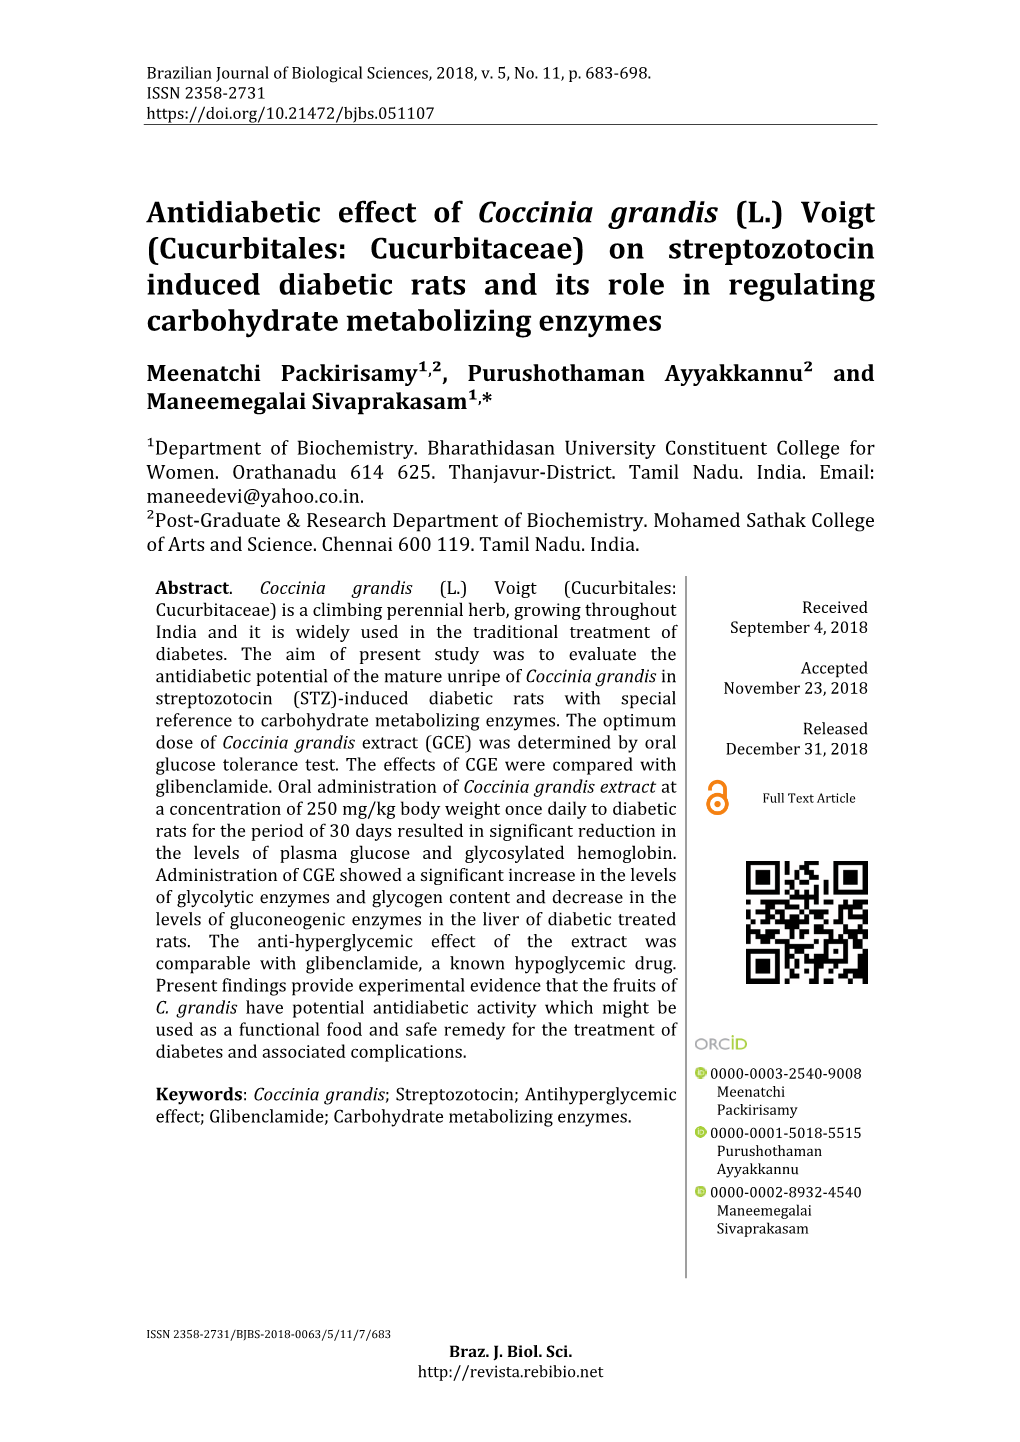 Antidiabetic Effect of Coccinia Grandis (L.) Voigt (Cucurbitales: Cucurbitaceae) on Streptozotocin Induced Diabetic Rats And